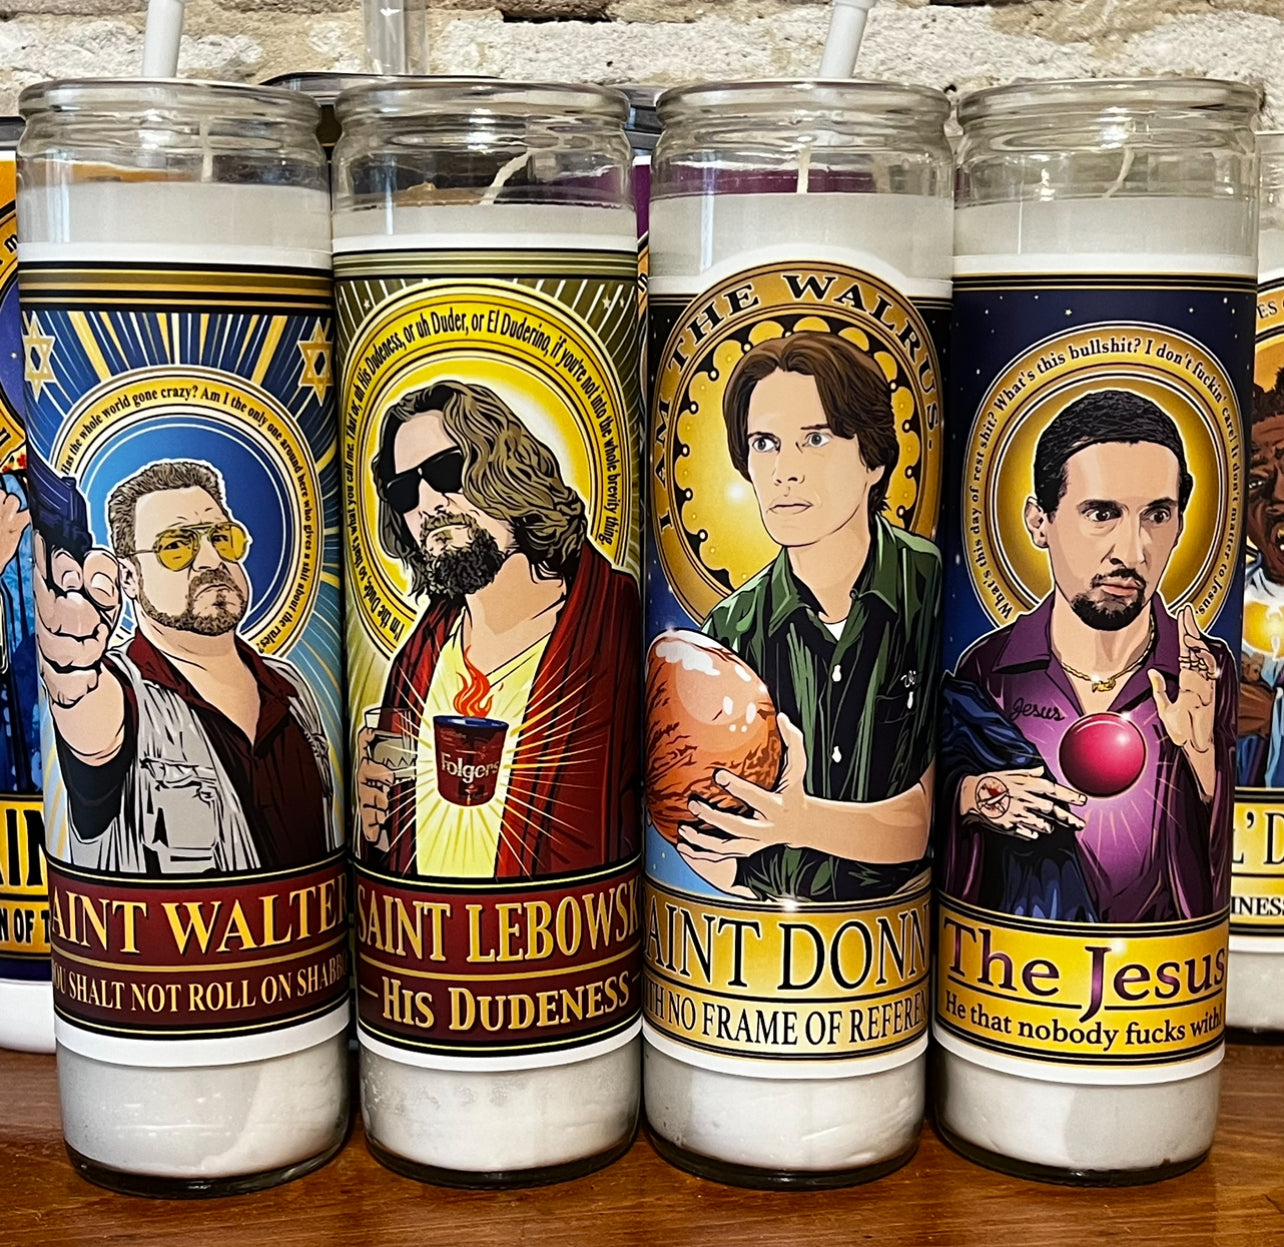 The Jesus Candle Cleaverandblade.com